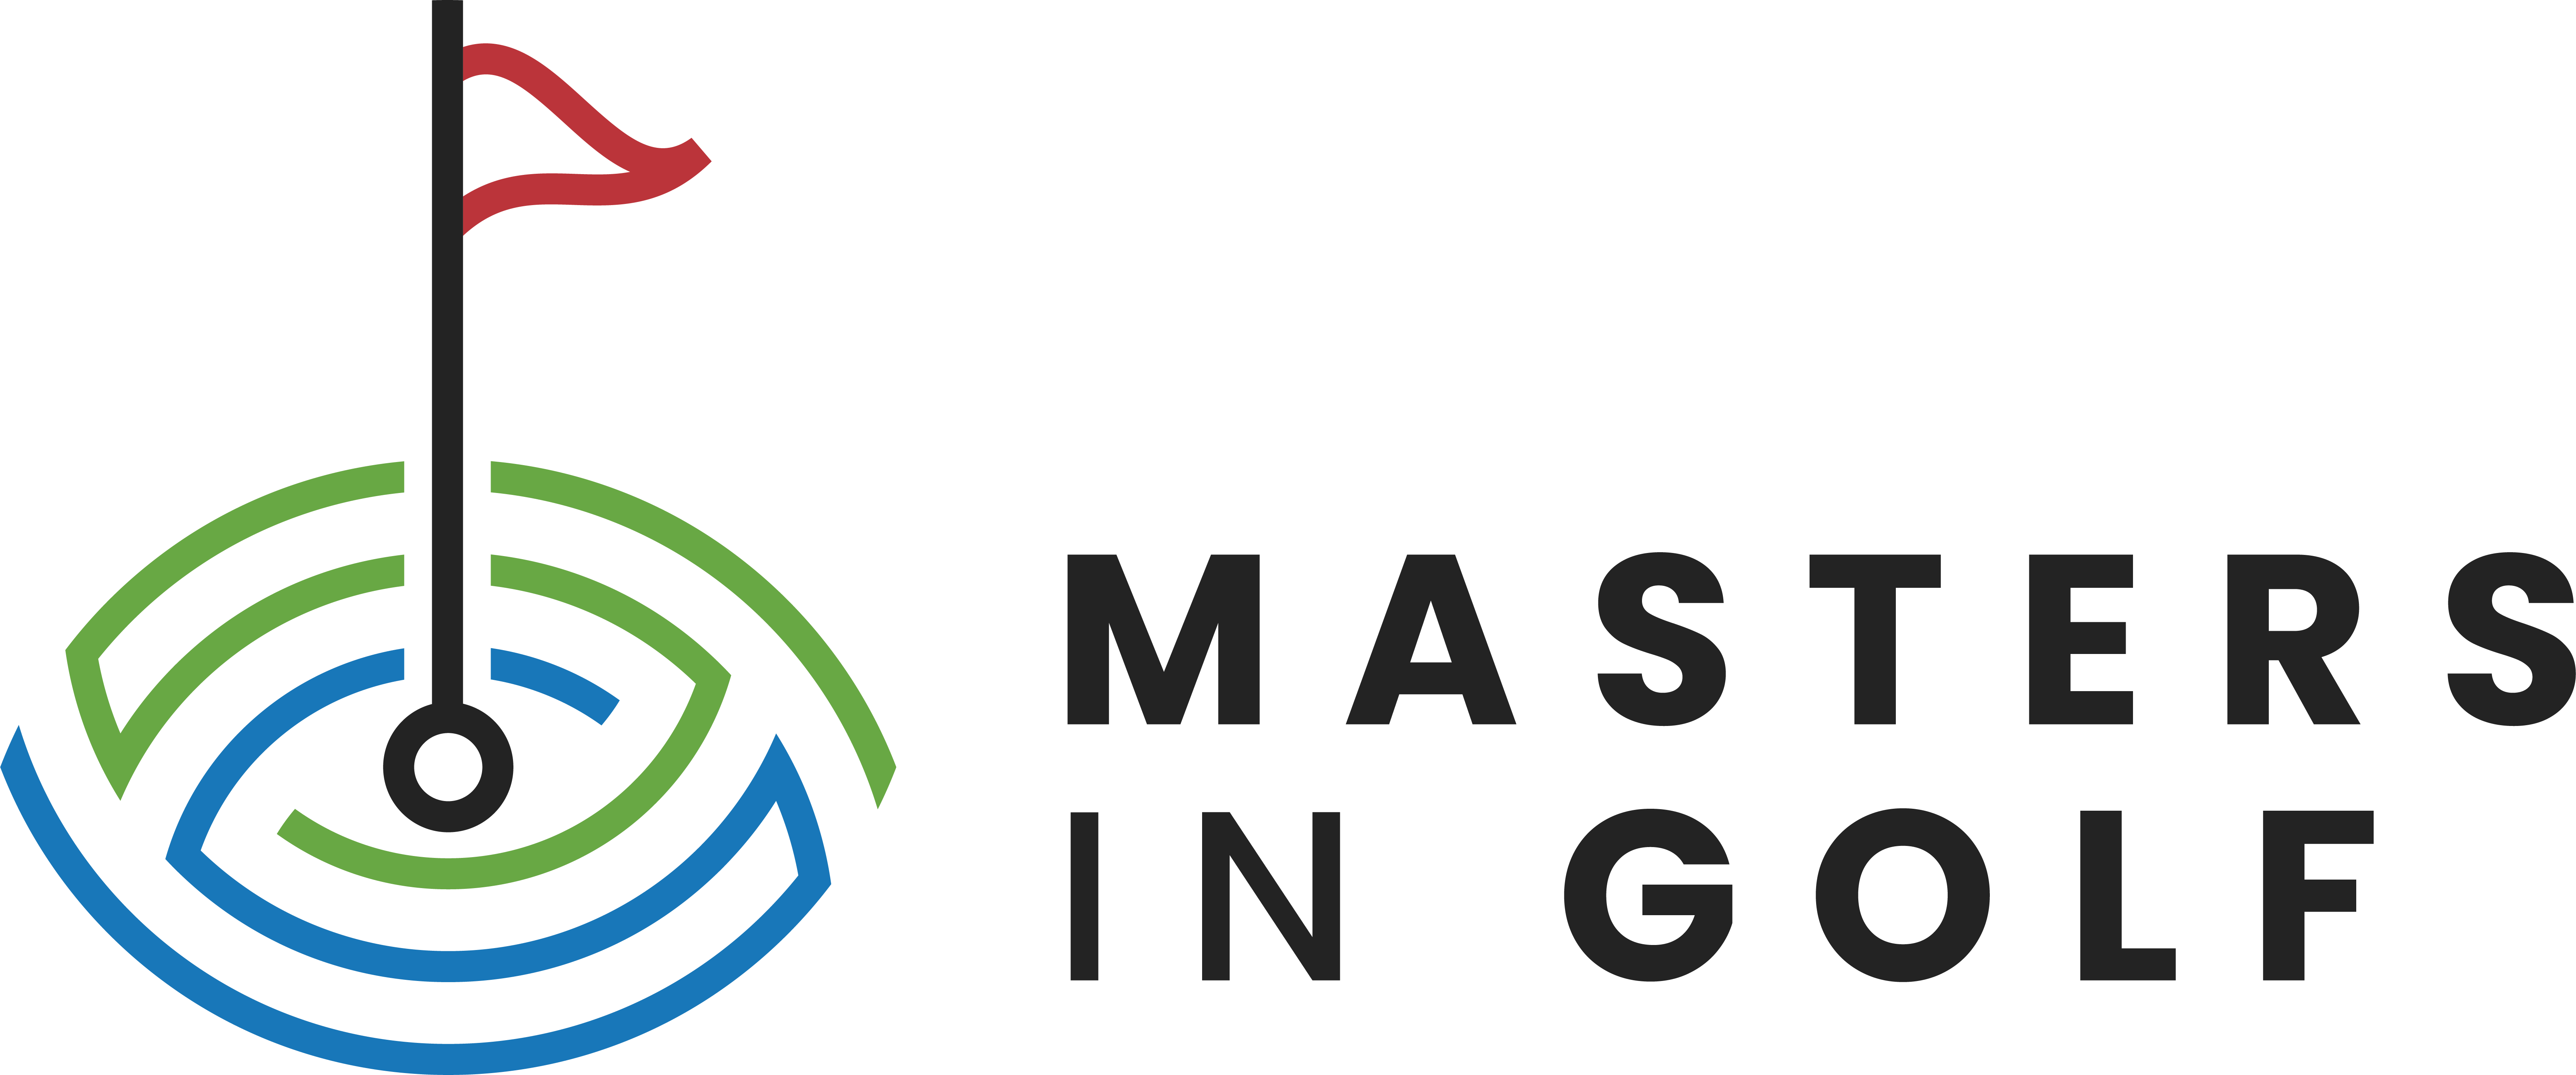 Masters In Golf logo